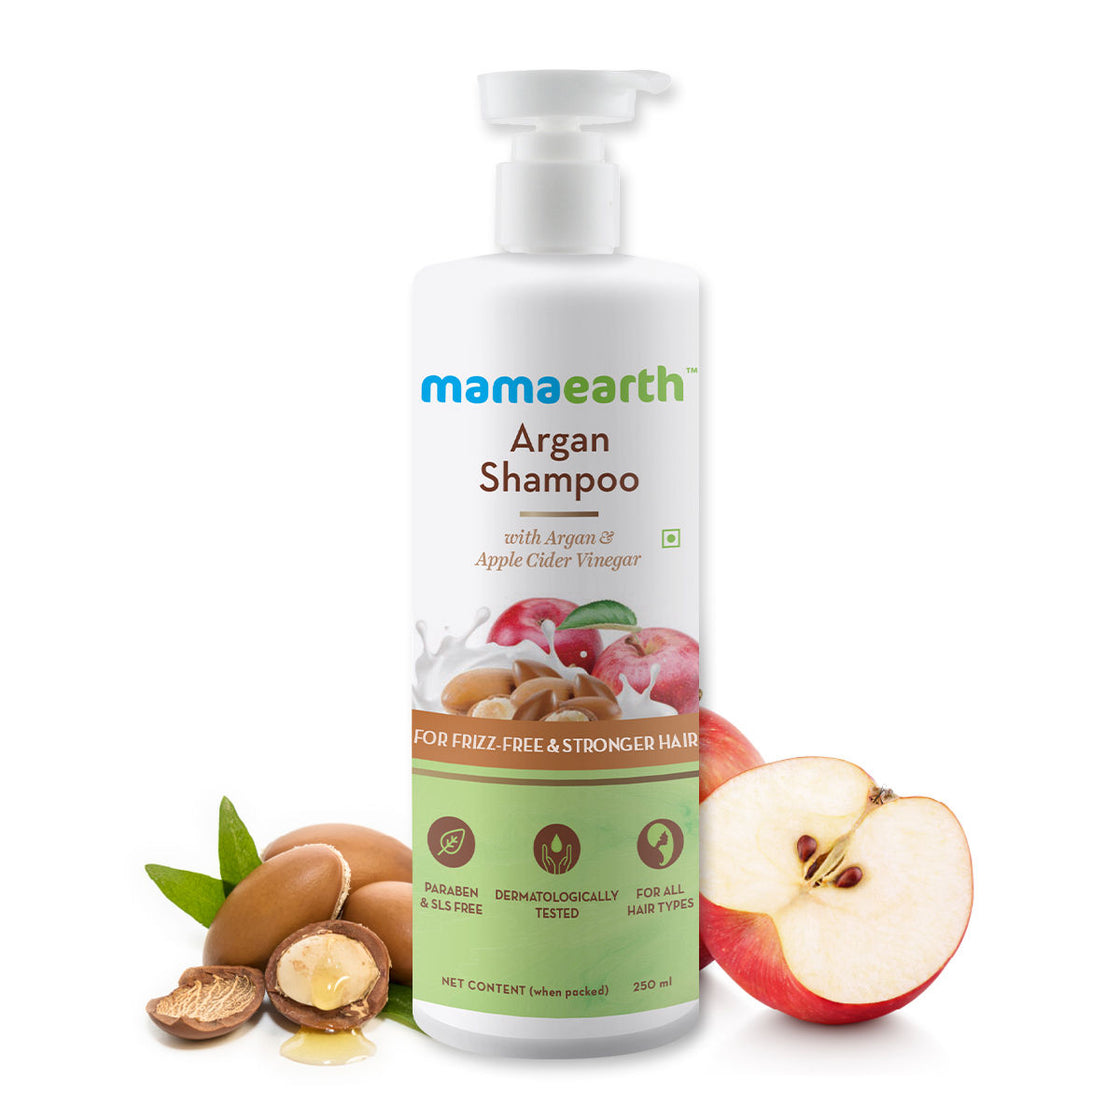 Mamaearth Argan & Apple Cider Vinegar Shampoo For Frizz Free & Strong Hair-2